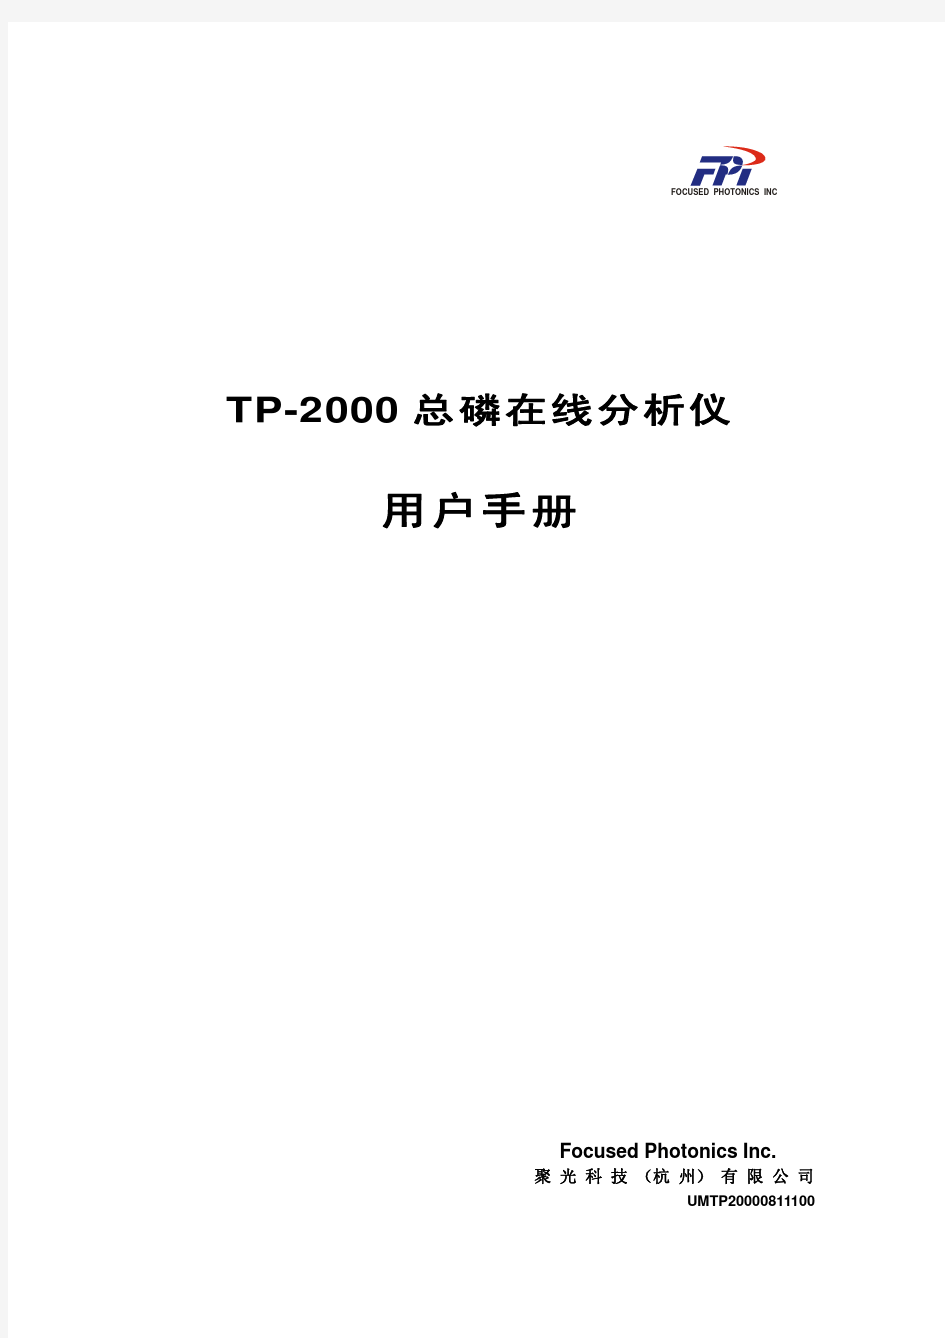 TP-2000总磷在线分析仪用户手册-1.01